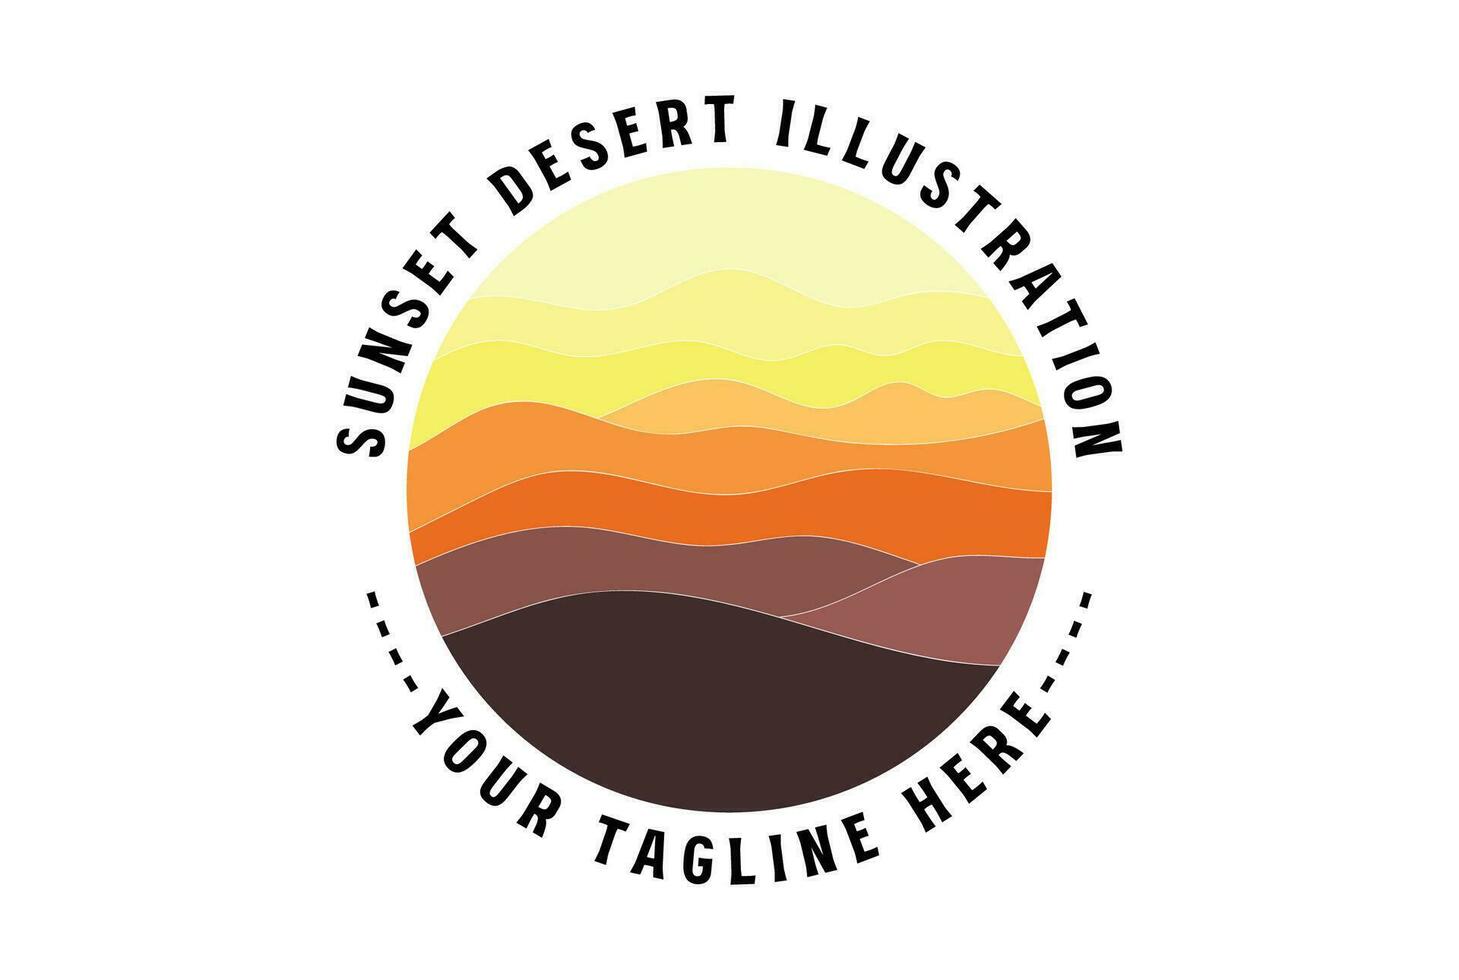 Circle Circular Sunset or Sunrise Desert Mountain Badge Emblem Illustration Vector